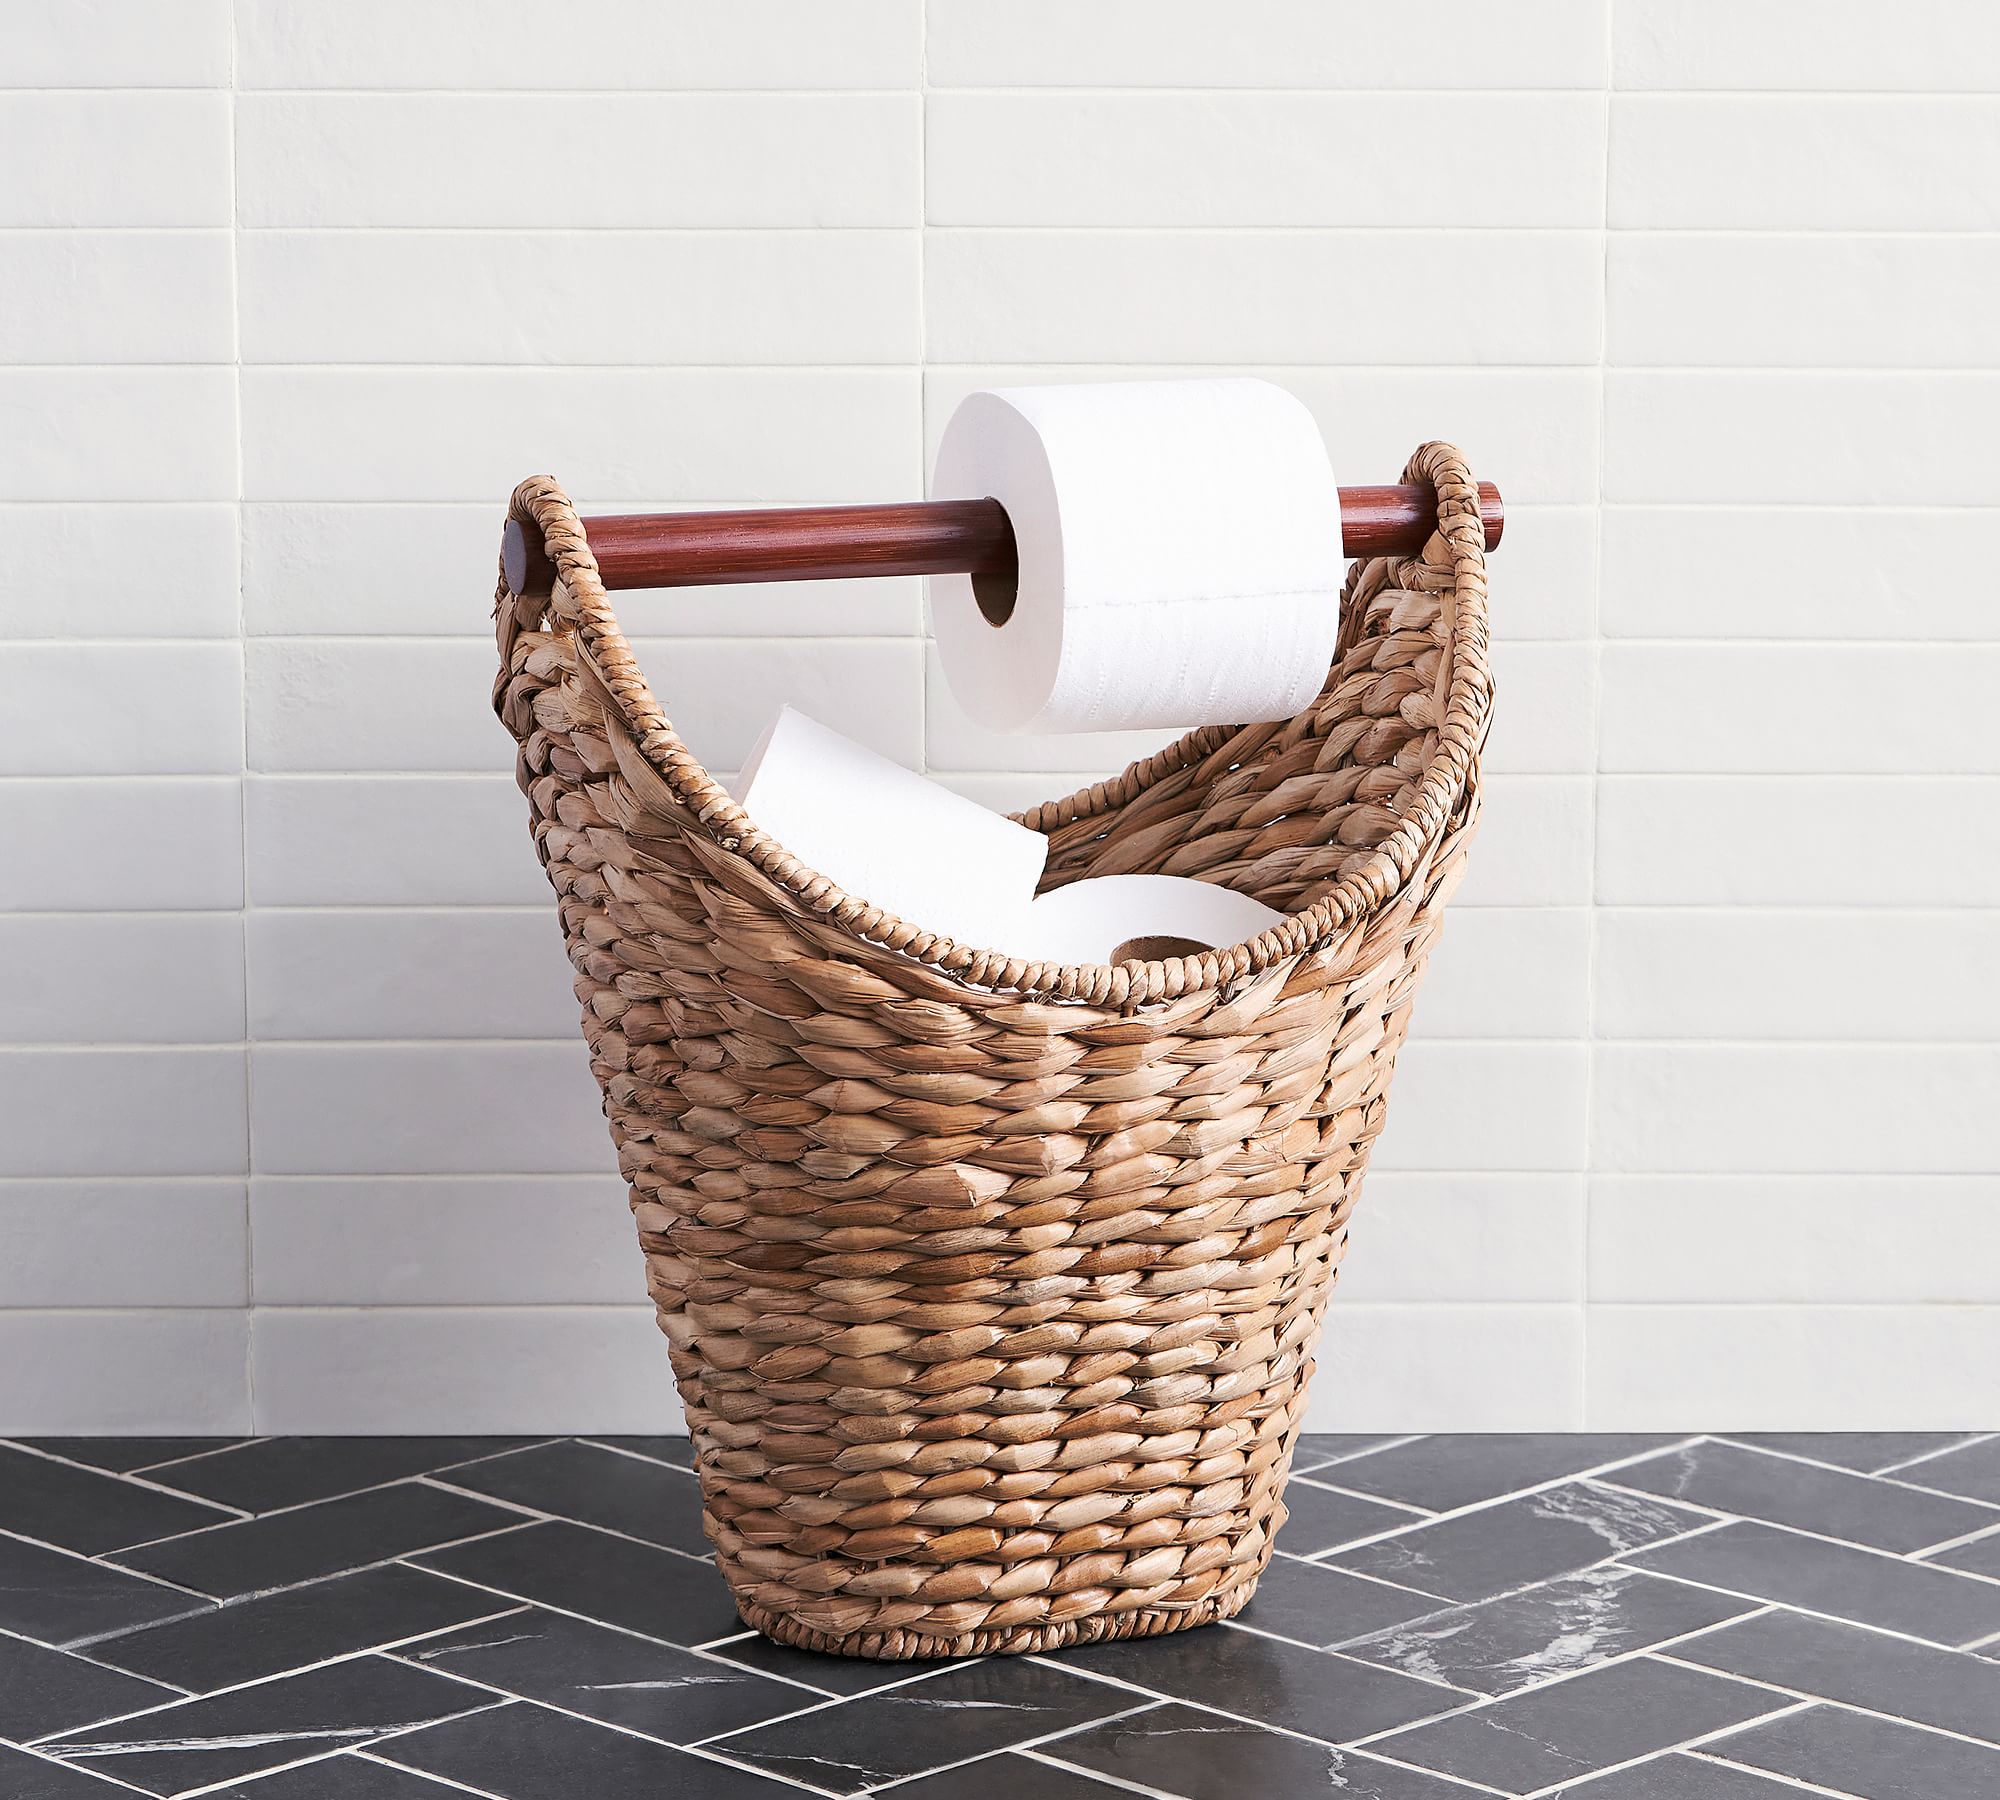 Unique Home Gifts - Toilet Paper Holder - Steelman